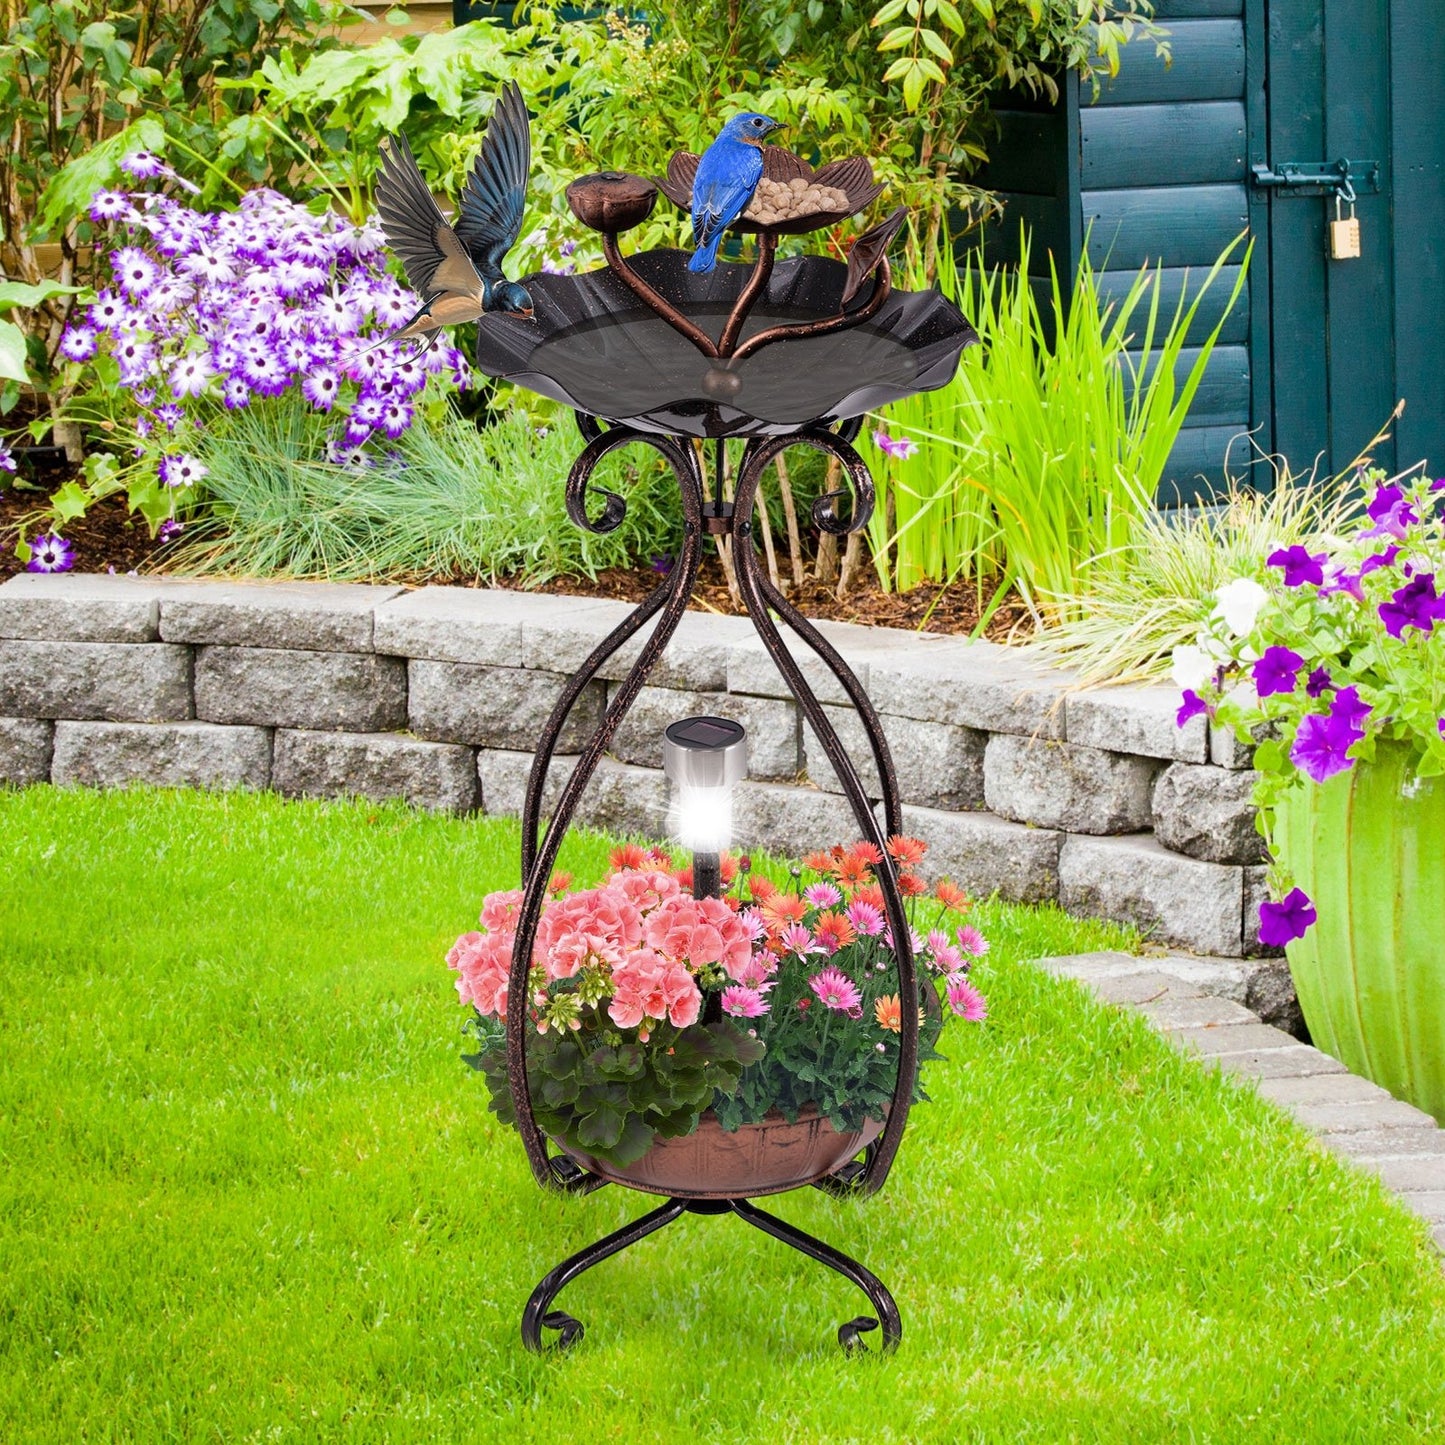 Solar Outdoor Bird Bath Feeder Combo with Flower Planter Pedestal and Solar Lights, Copper